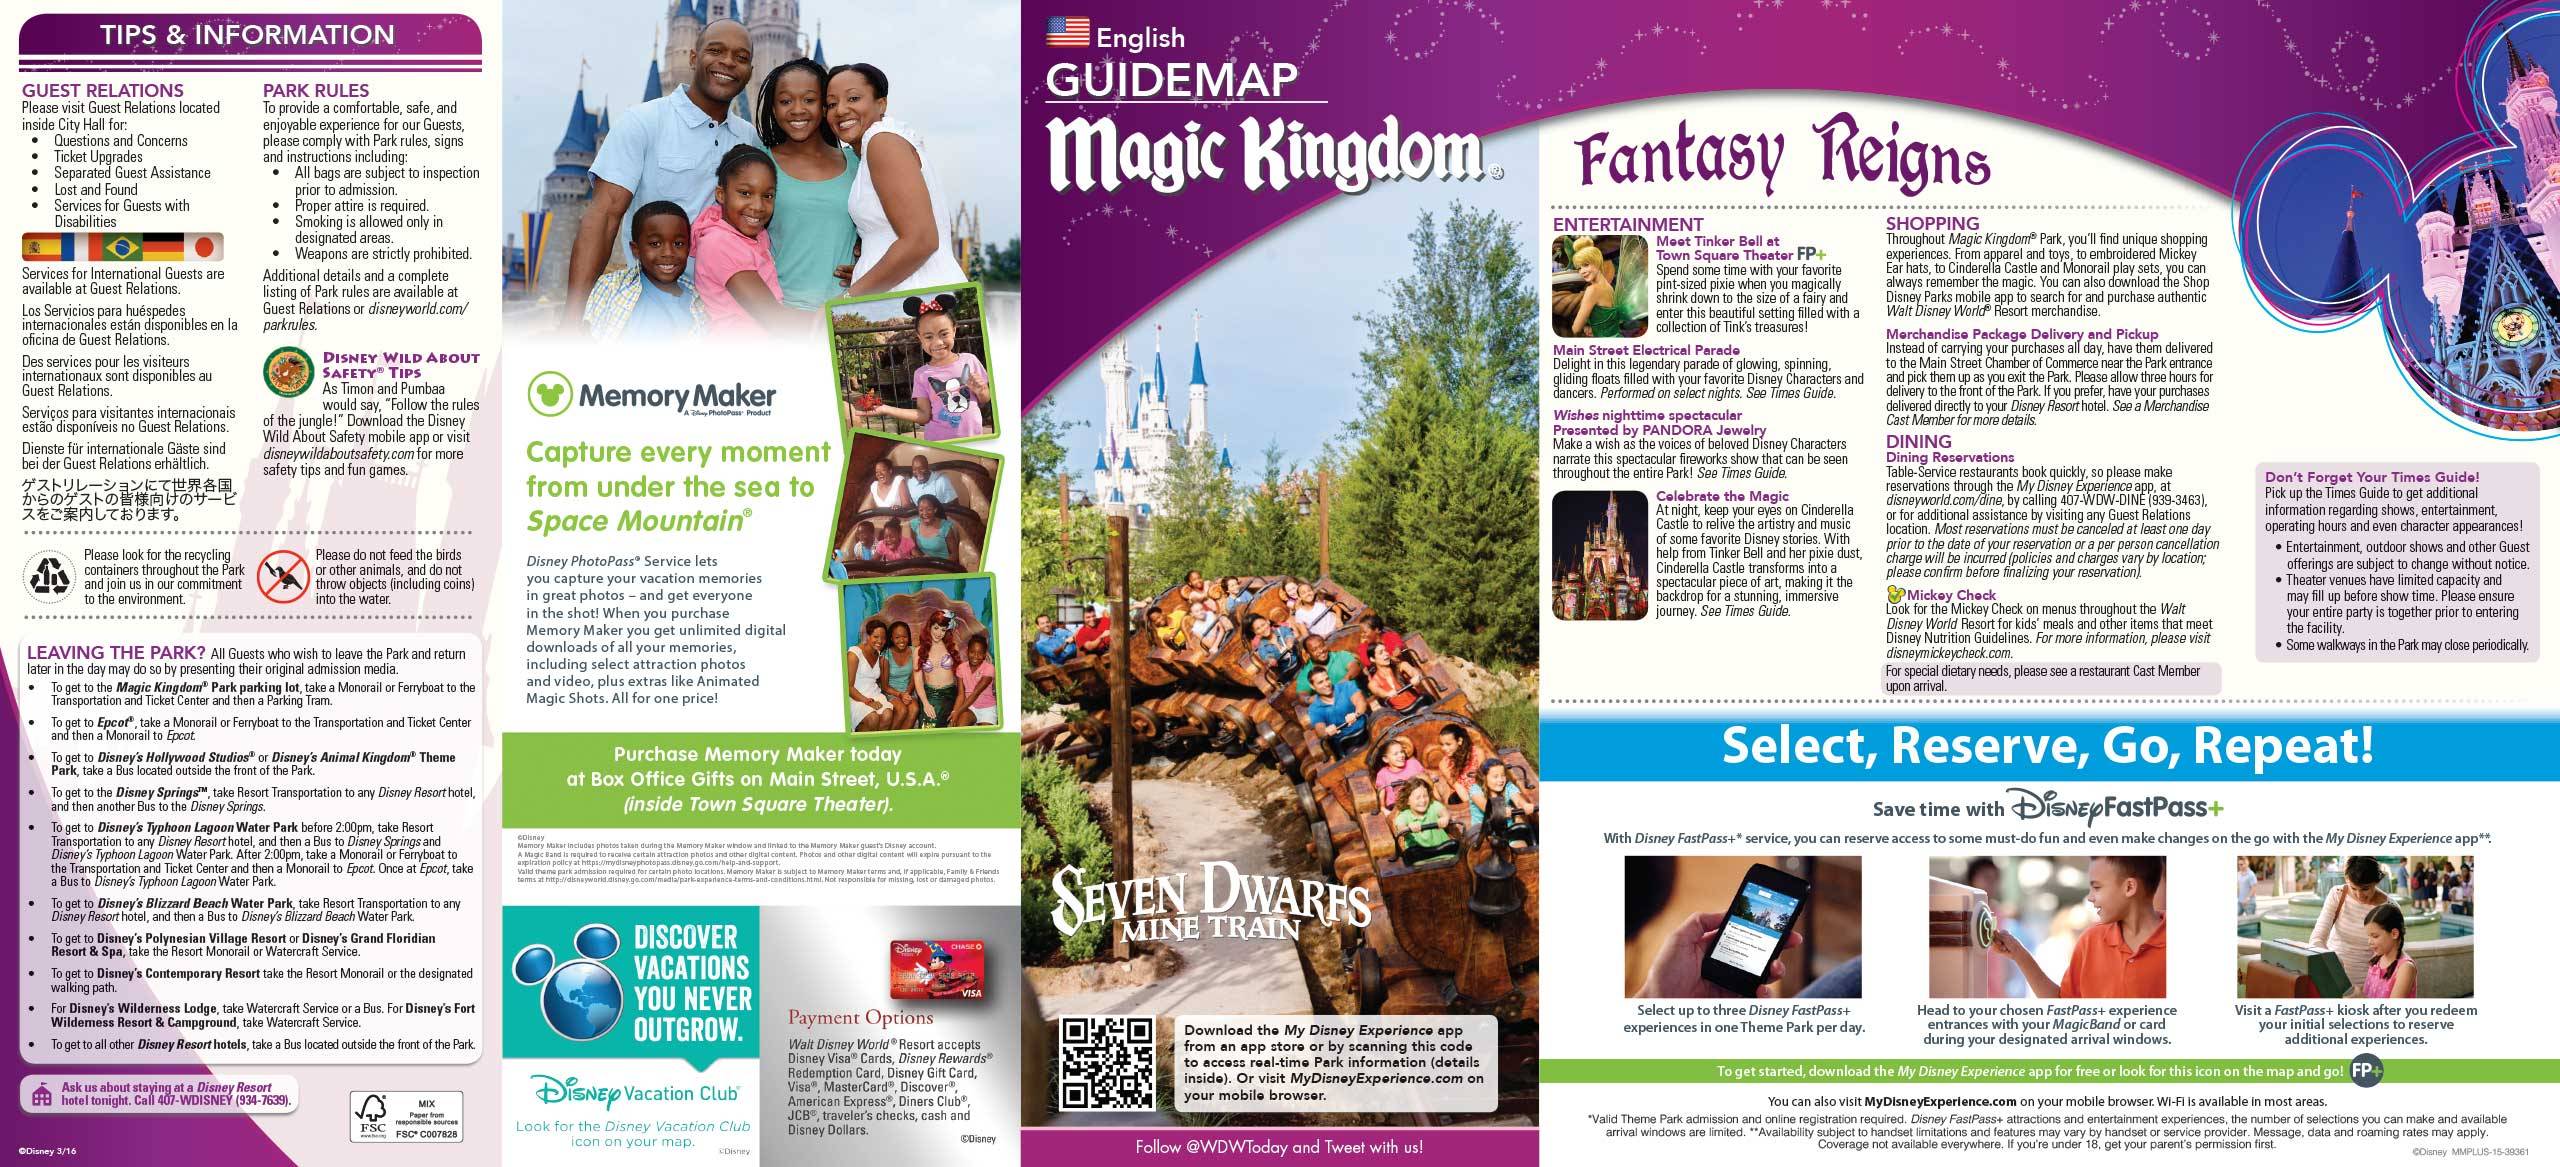 Magic Kingdom Guide Map May 2016 - Front